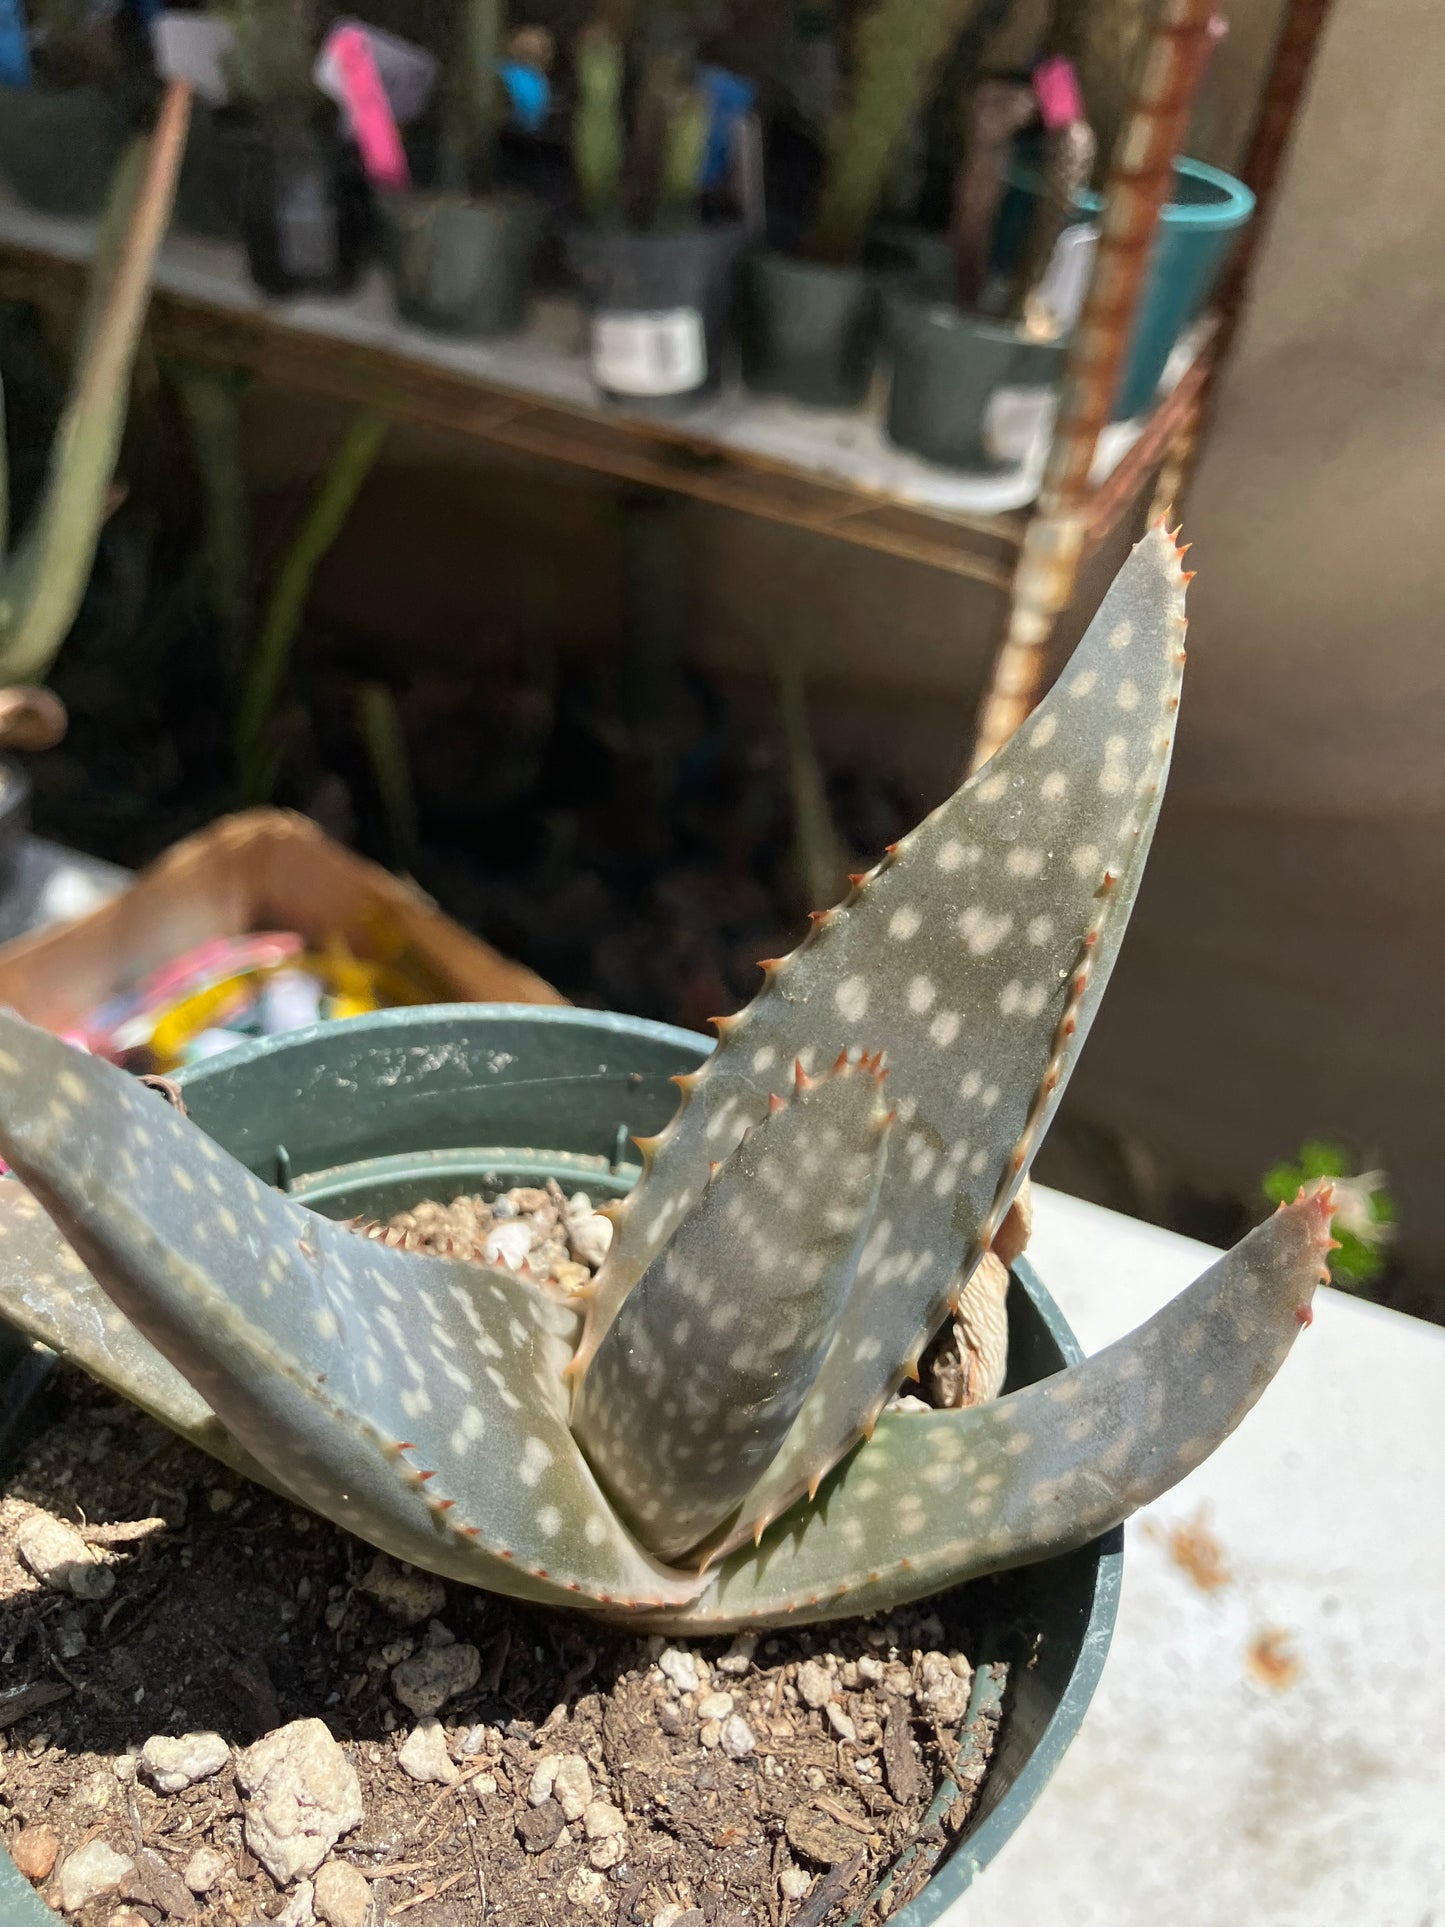 Aloe ~maculata "Soap Aloe" 4" Wide  #40G